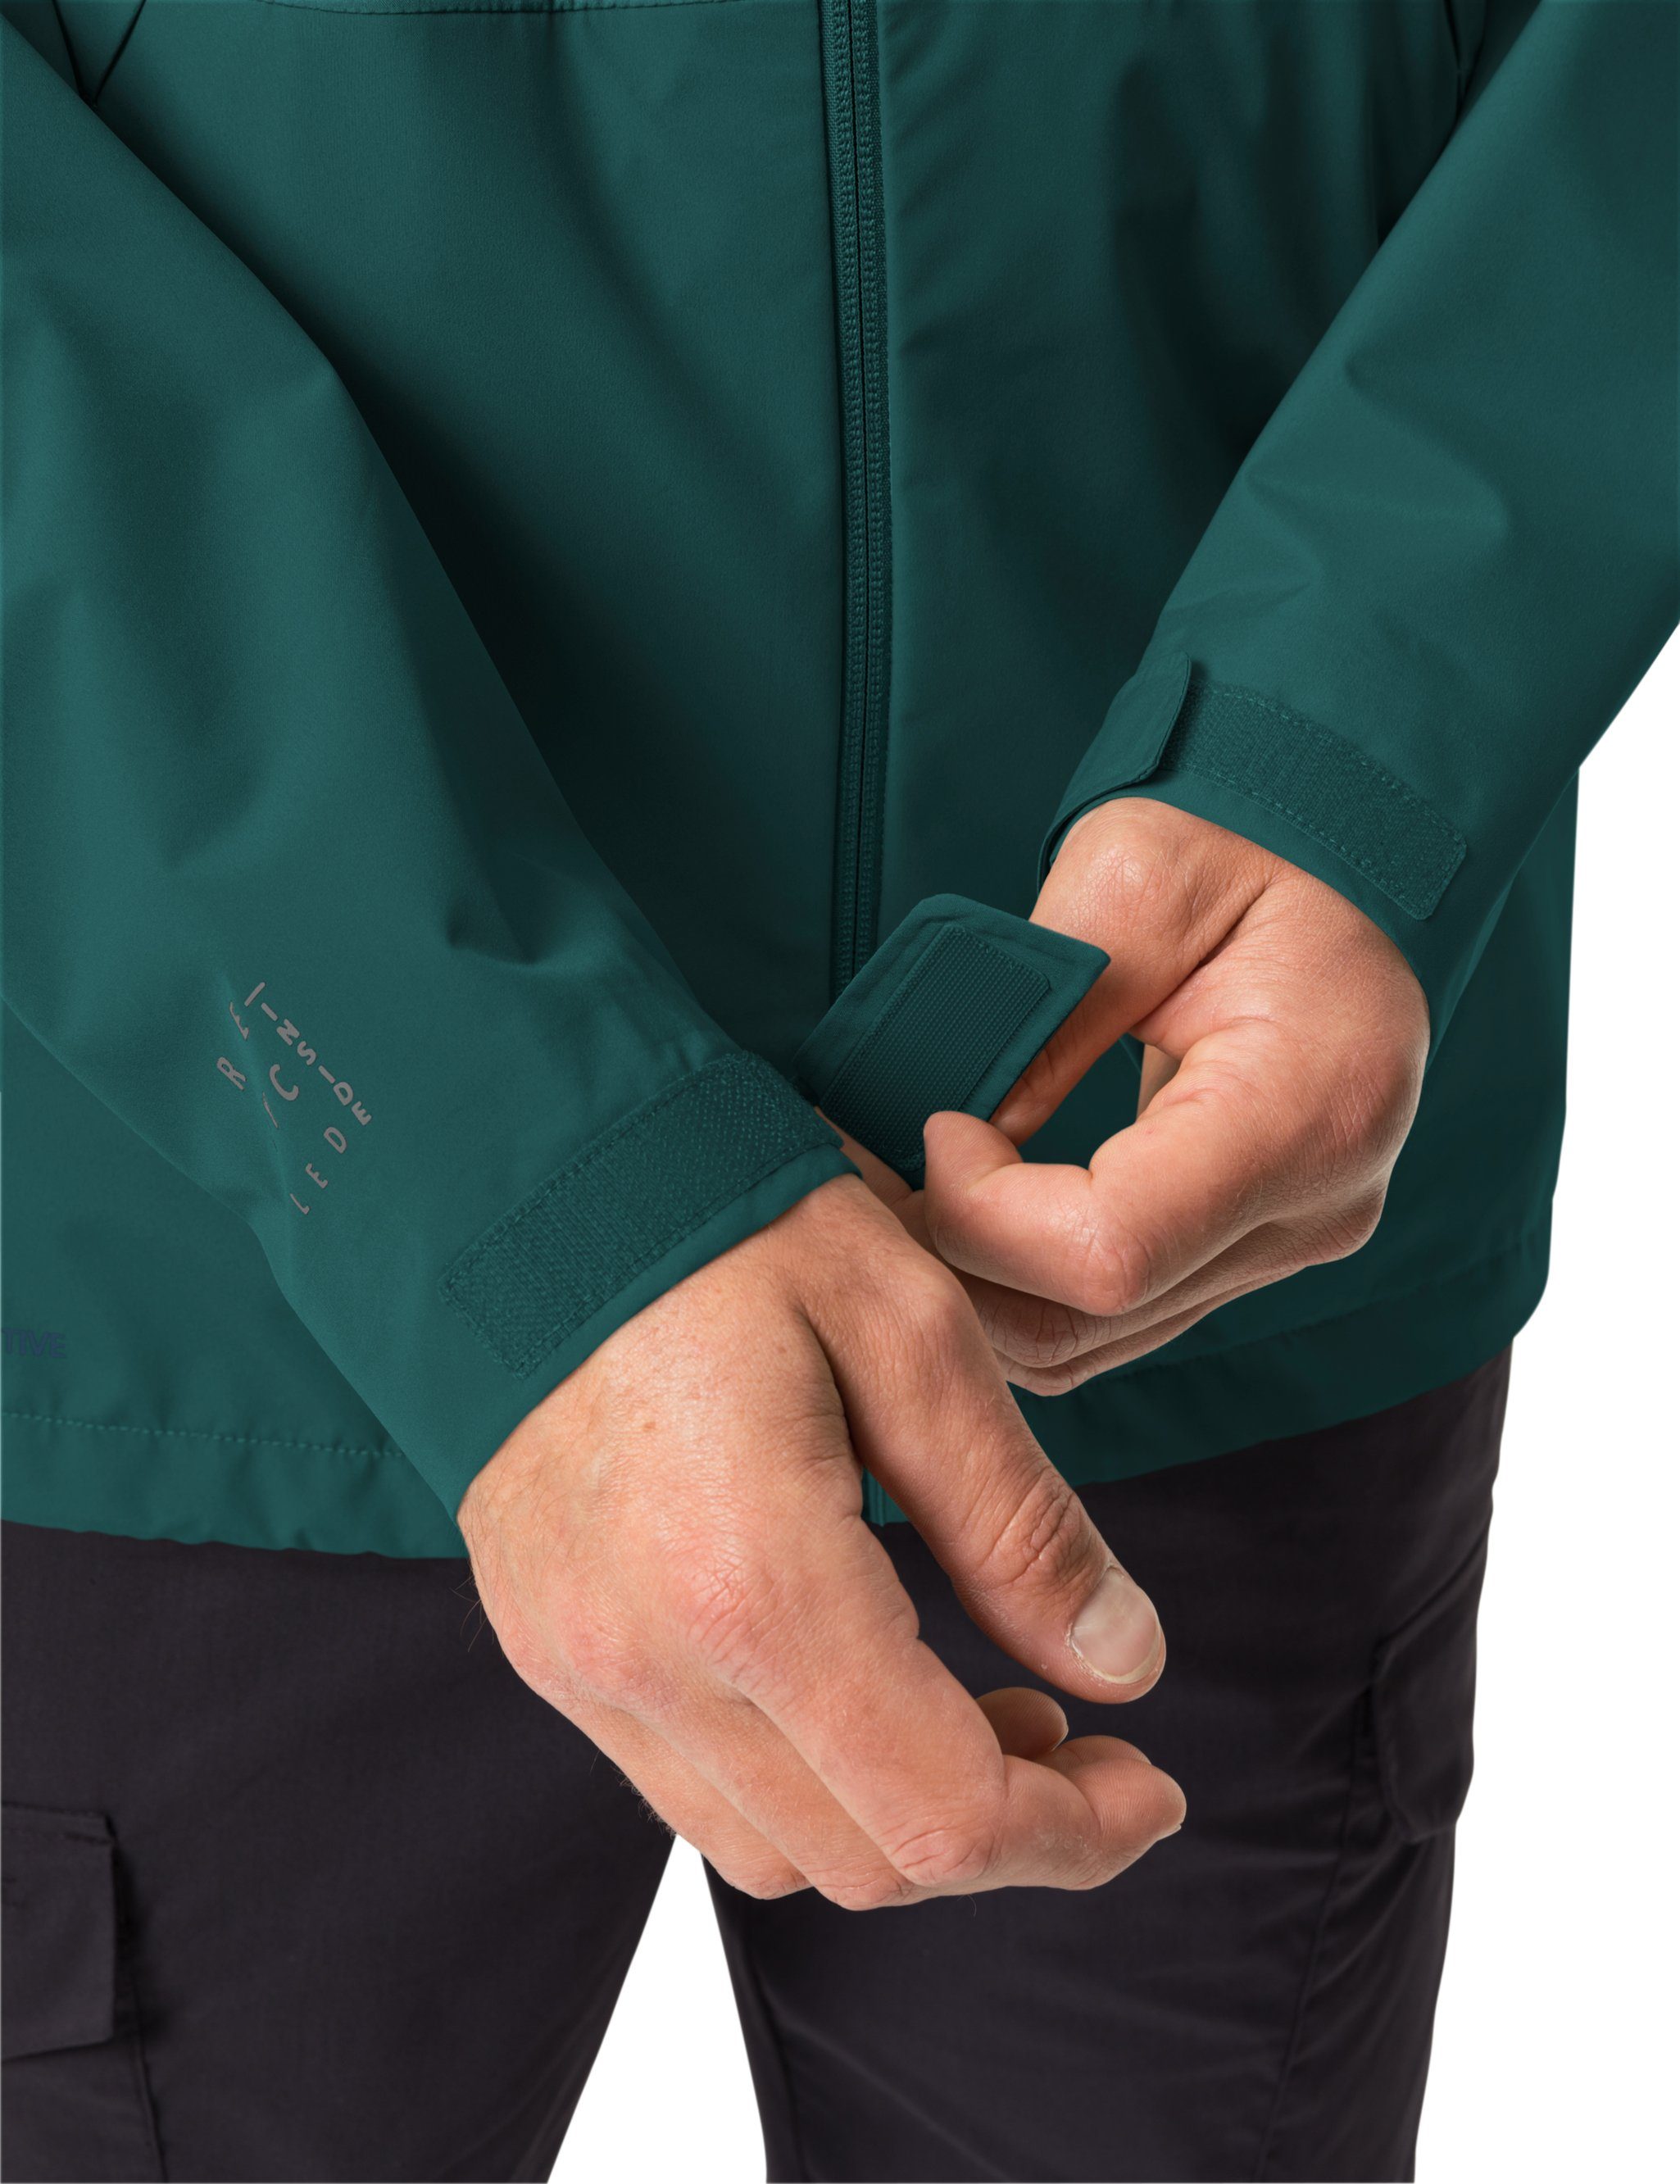 green 2.5L VAUDE Men's (1-St) Jacket mallard Outdoorjacke Neyland kompensiert Klimaneutral